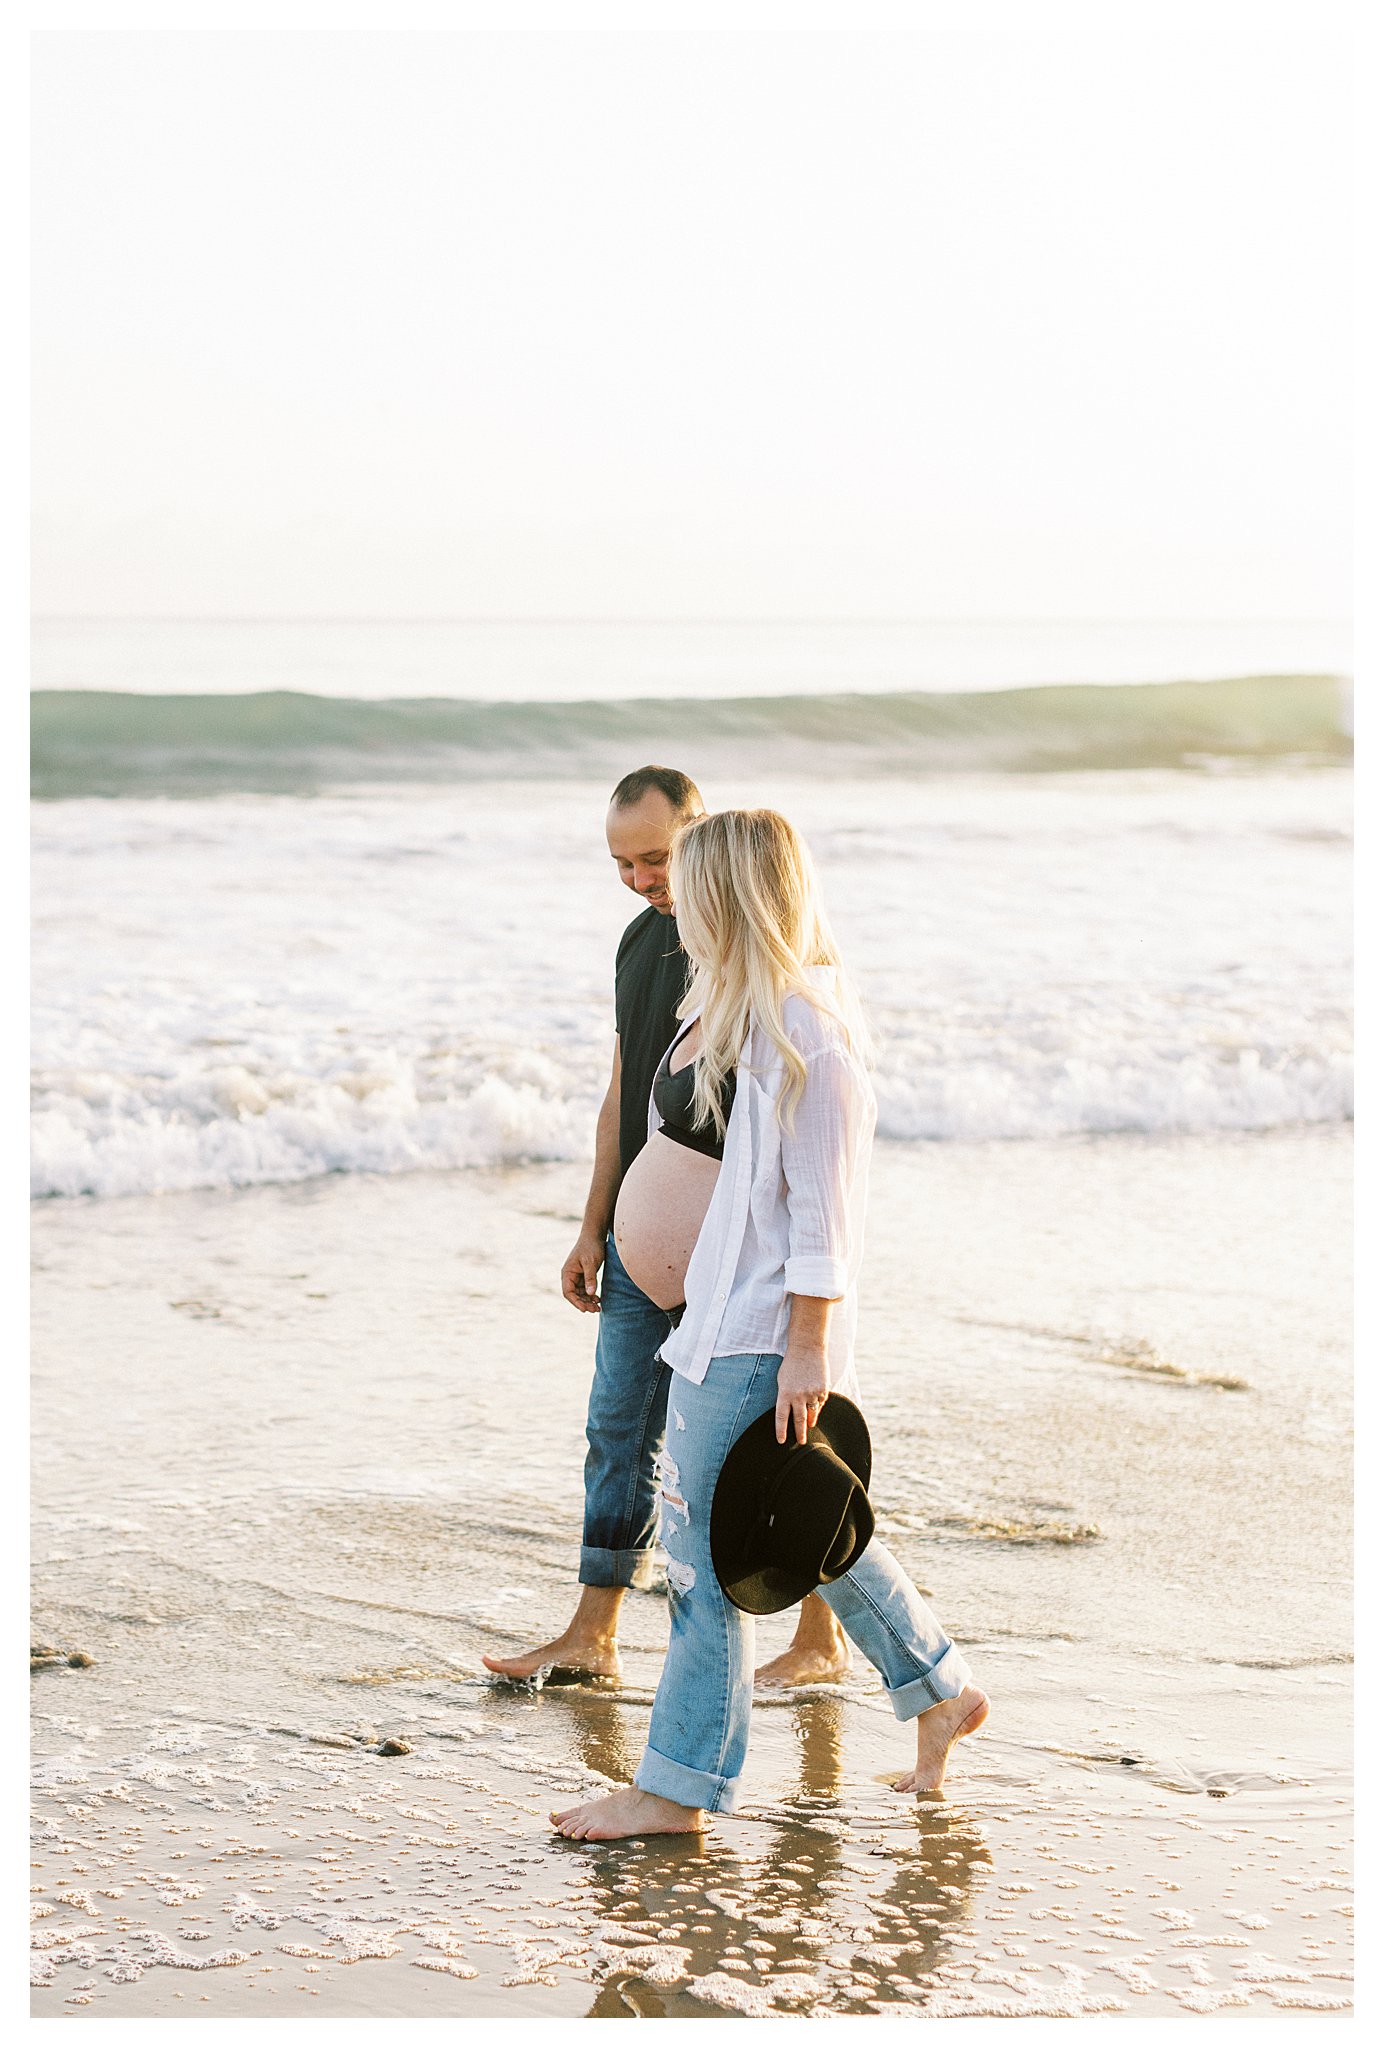 A pregnant couple walking along the beach in Malibu, Ca.